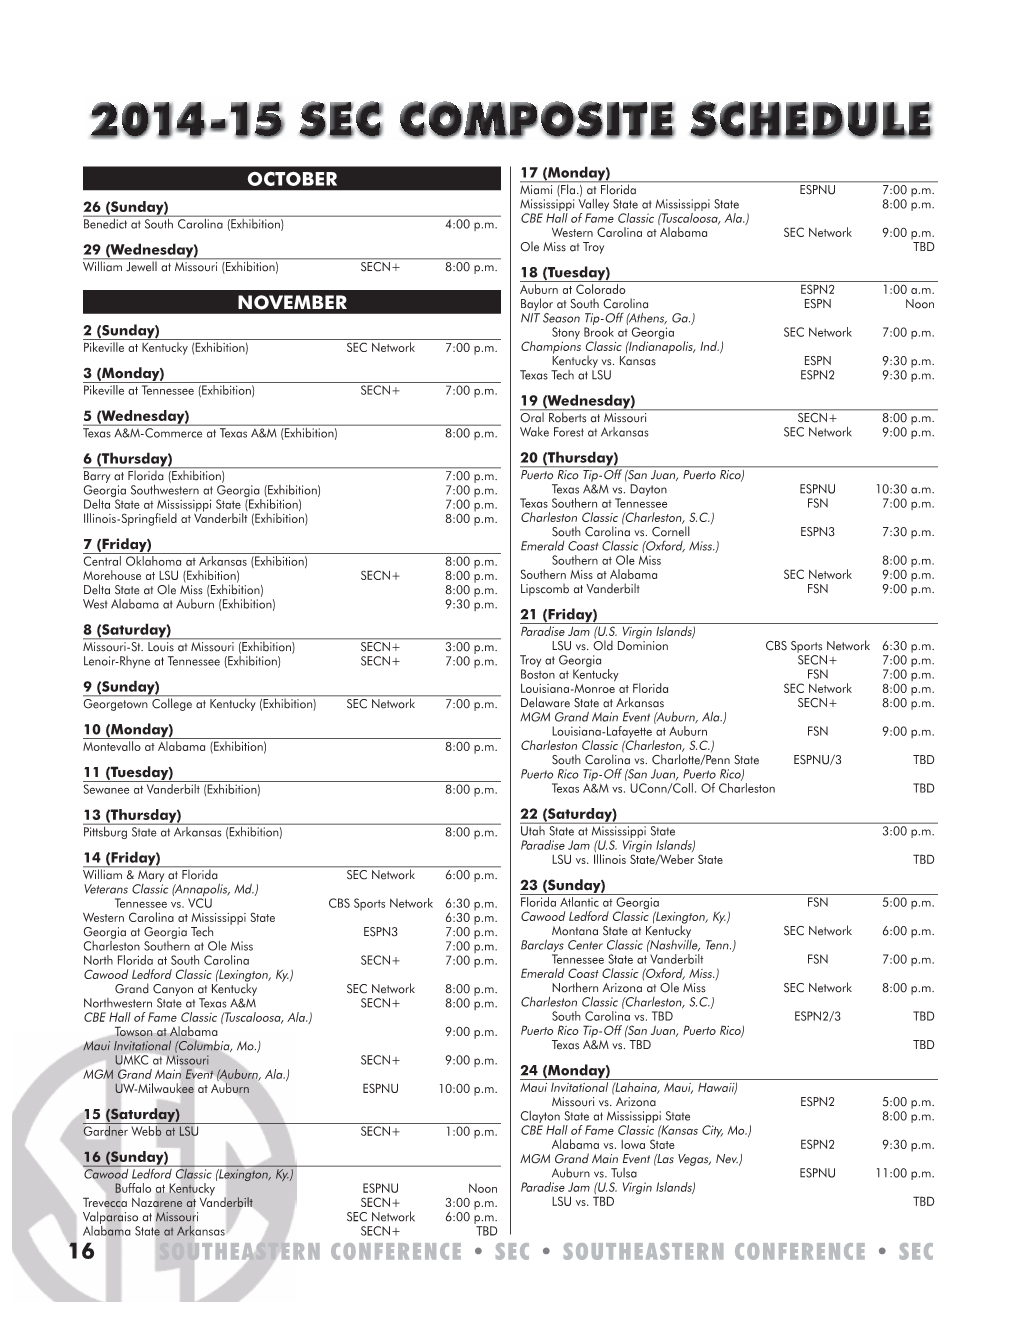 2014-15 Sec Composite Schedule